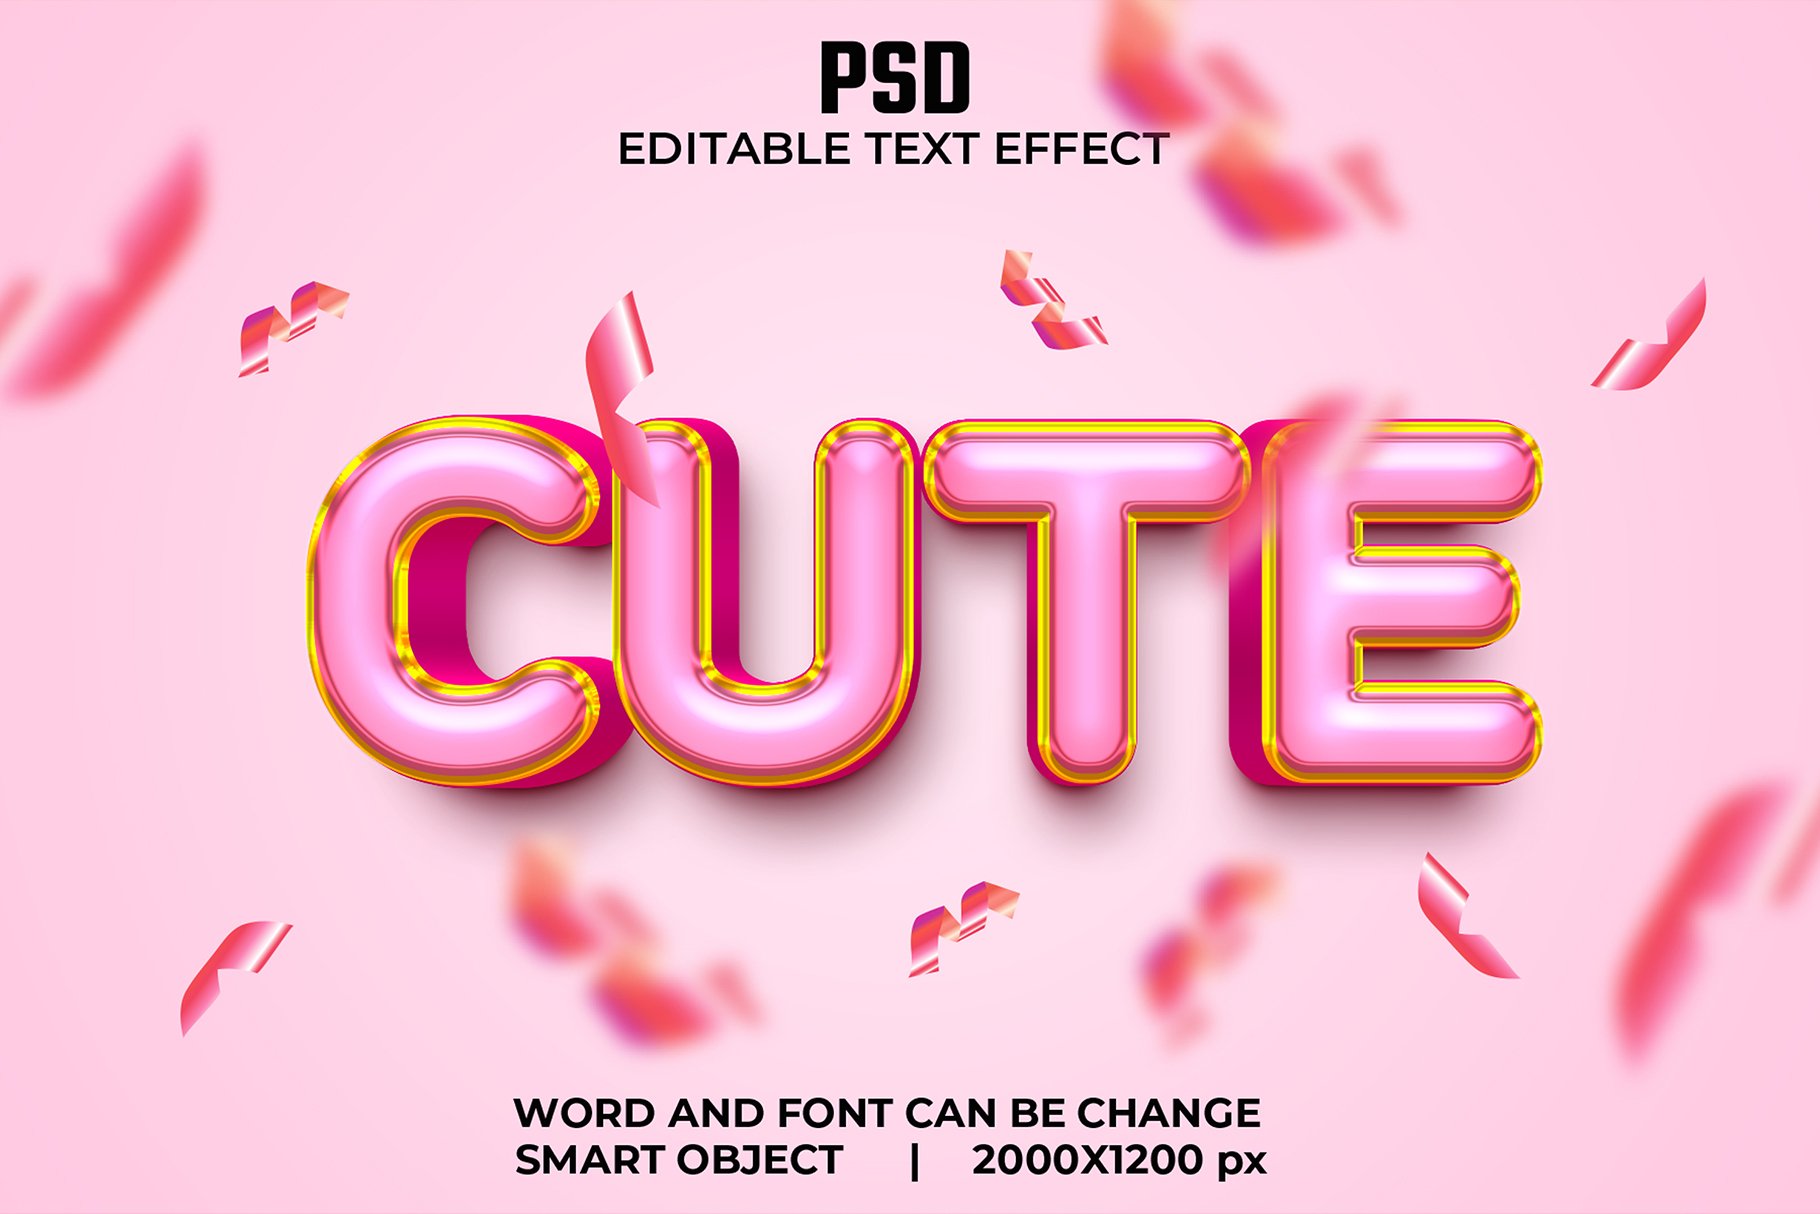 Cute 3d Editable Psd Text Effectcover image.